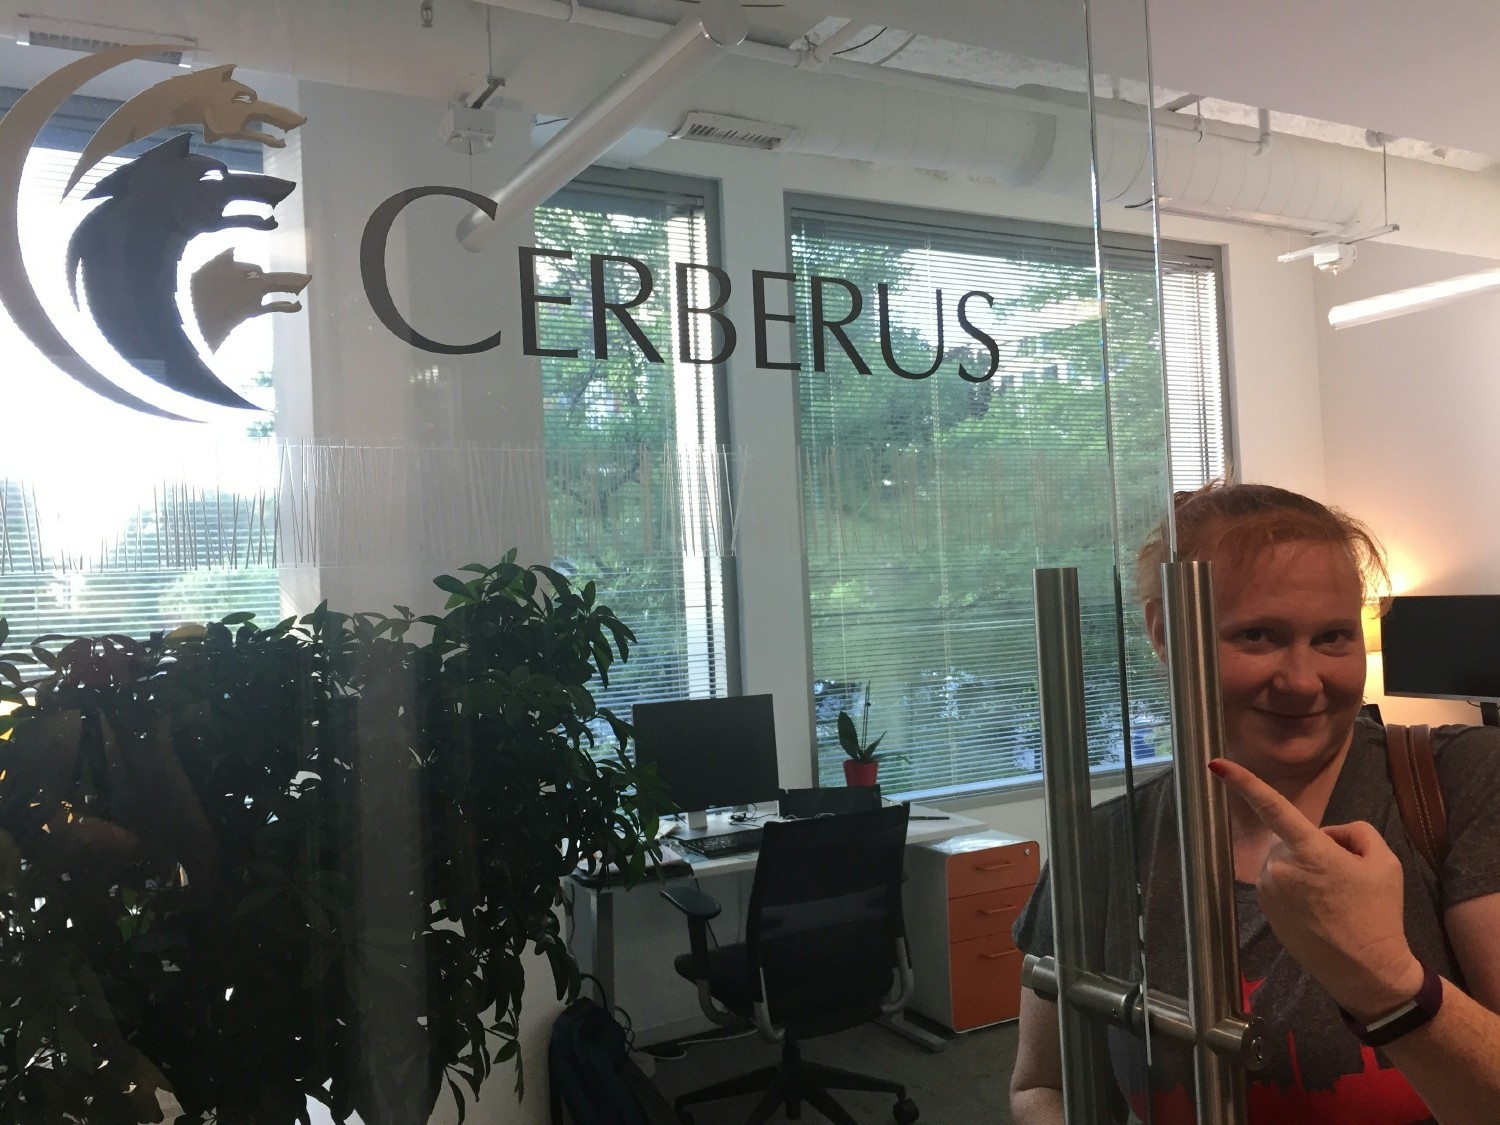 The Cerberus Office